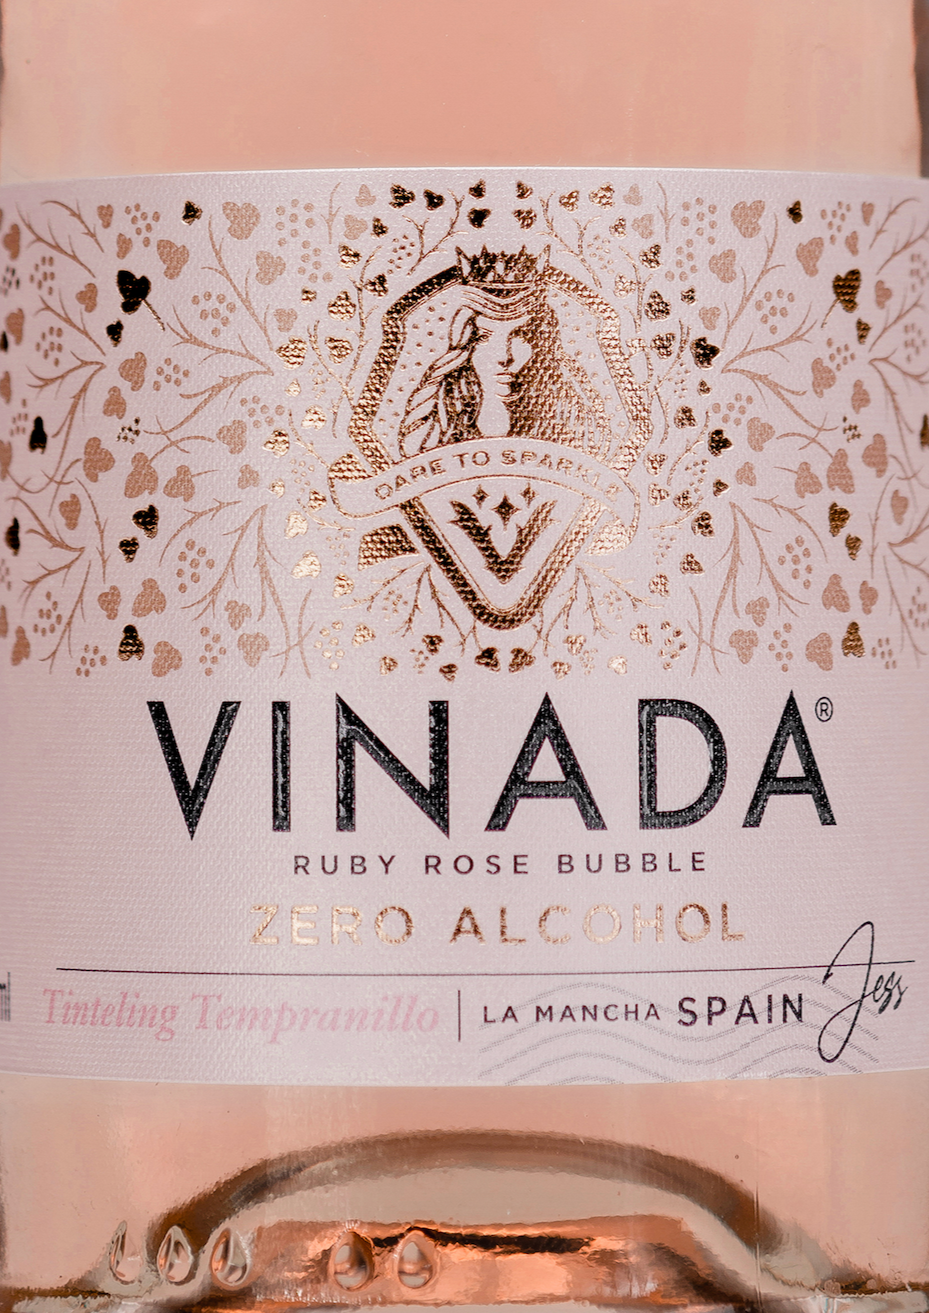 VINADA® Tinteling Tempranillo Rosé Mini (0%) 200 ml Zoom Label